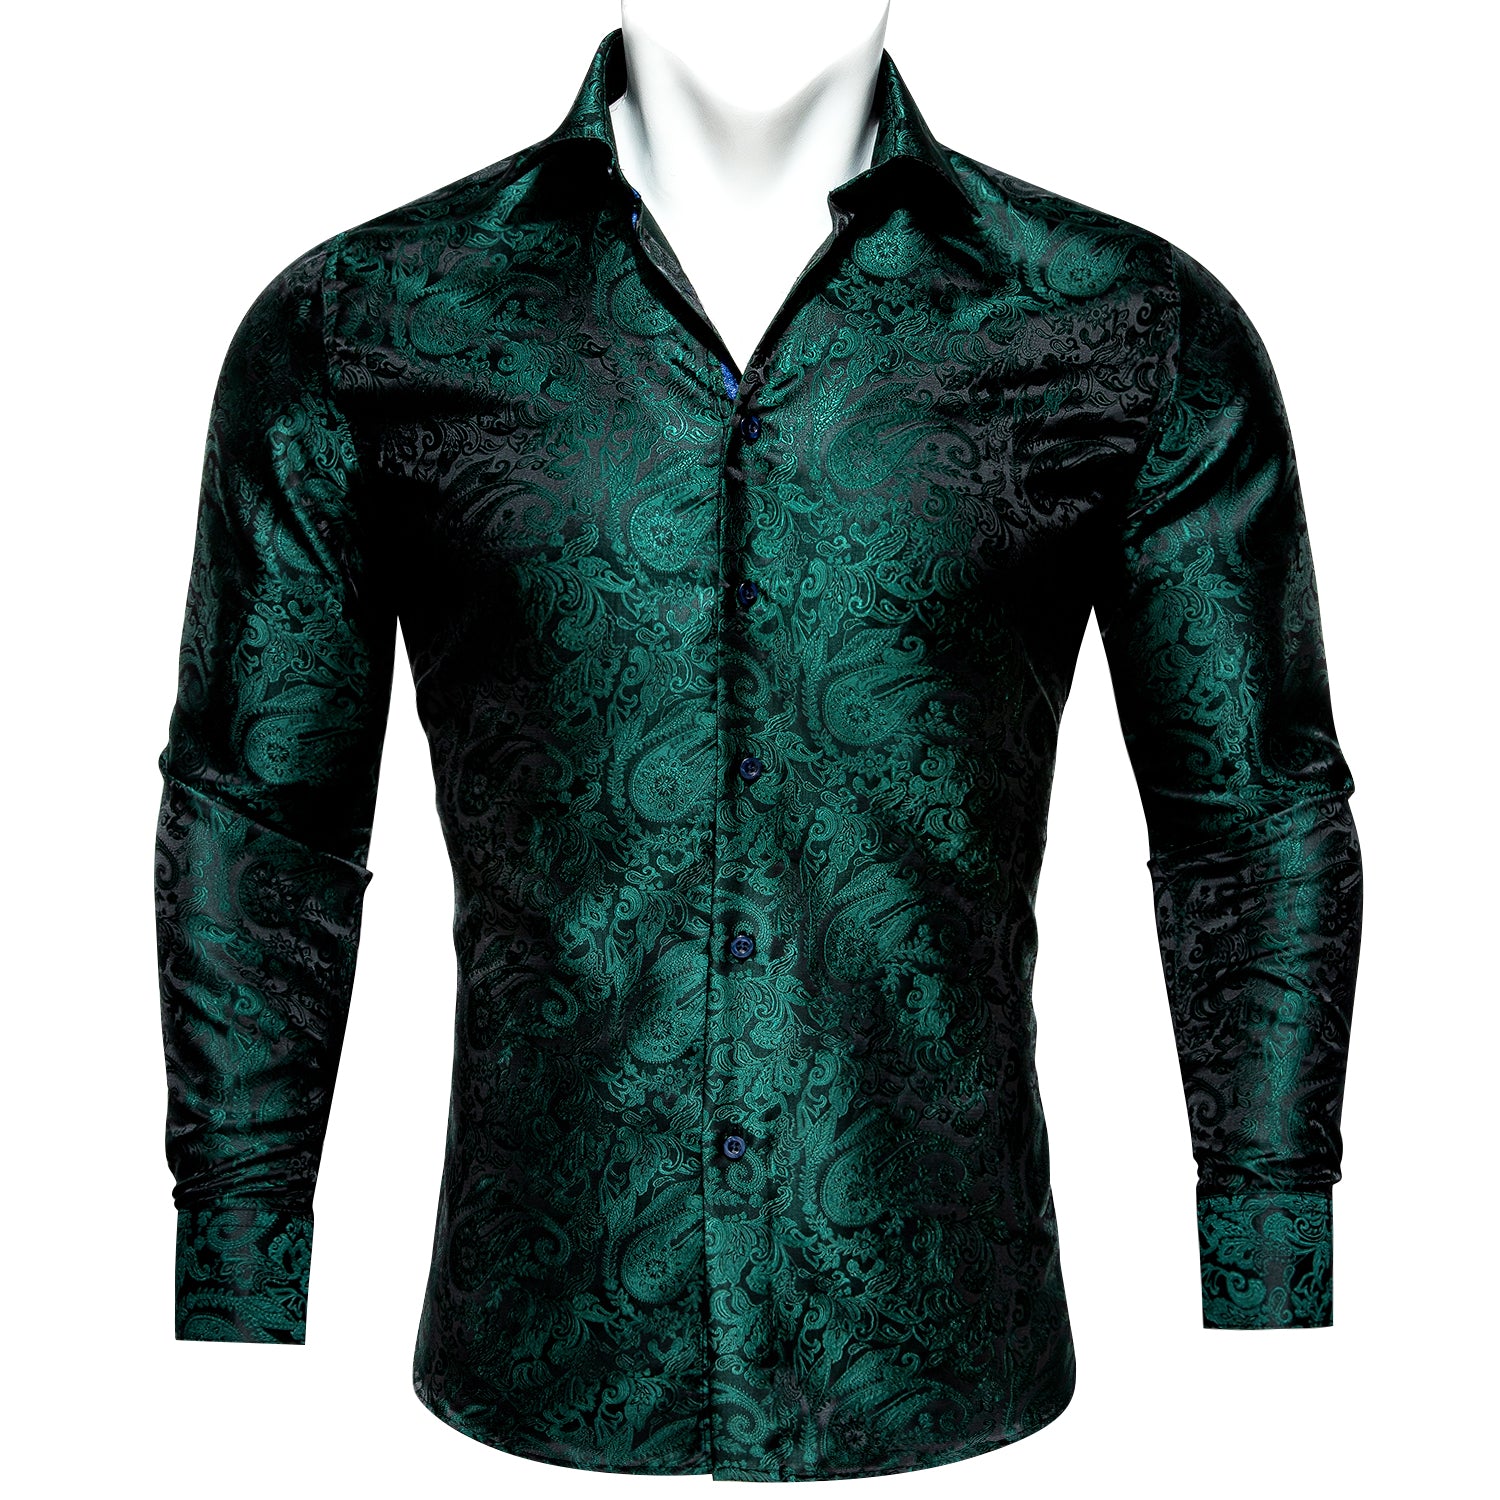 Barry.wang Green Paisley Silk Men's Long Sleeve Shirt